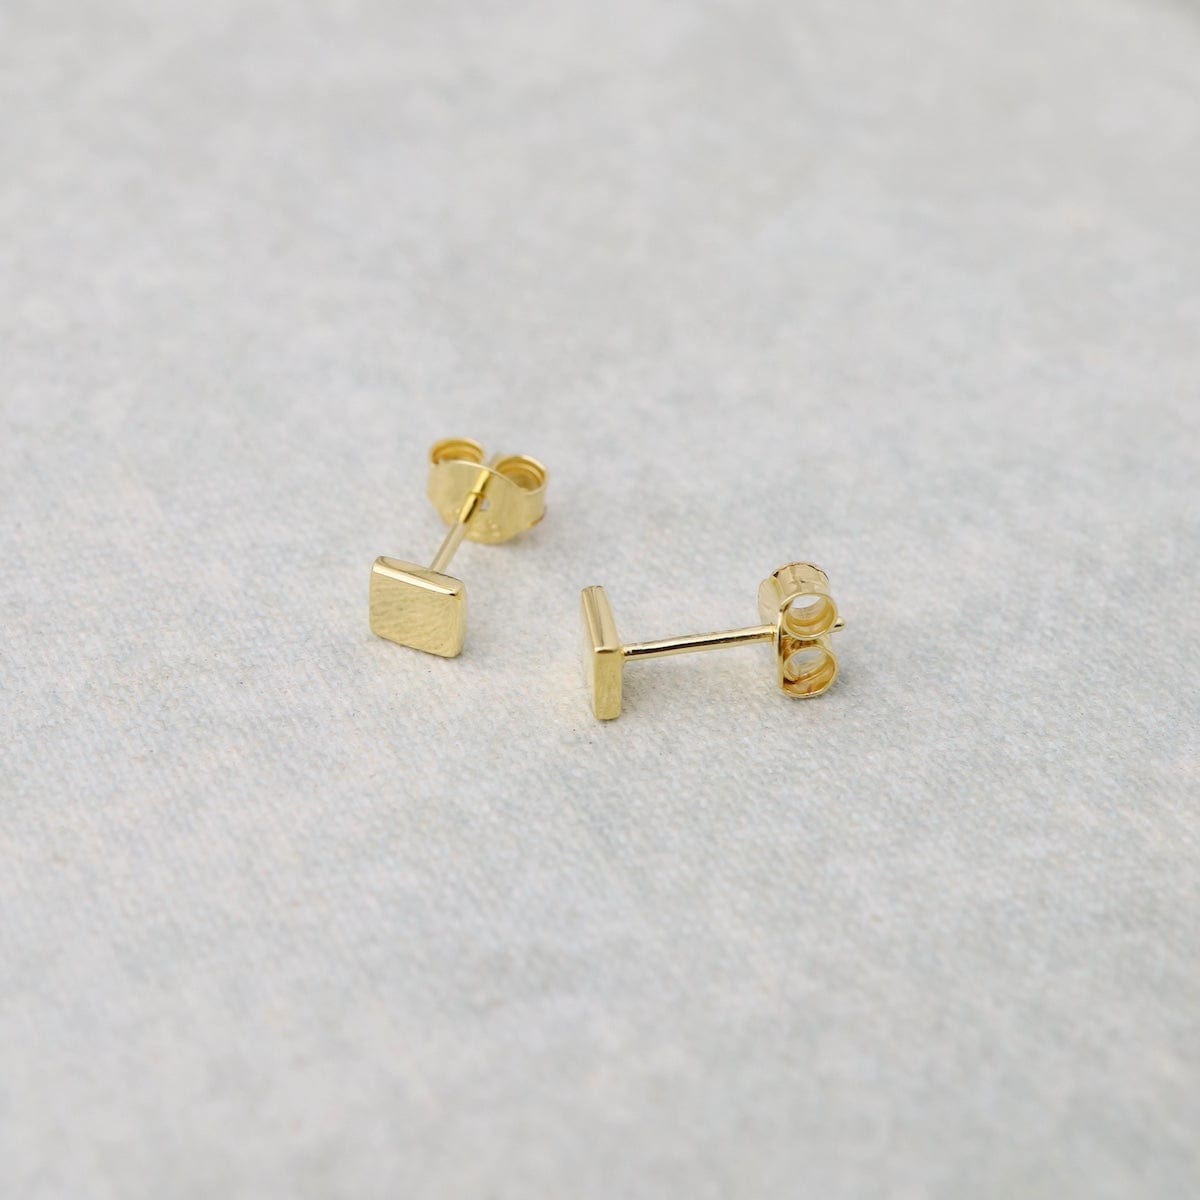 EAR-VRM Tiny Square Stud Earrings - Gold Vermeil